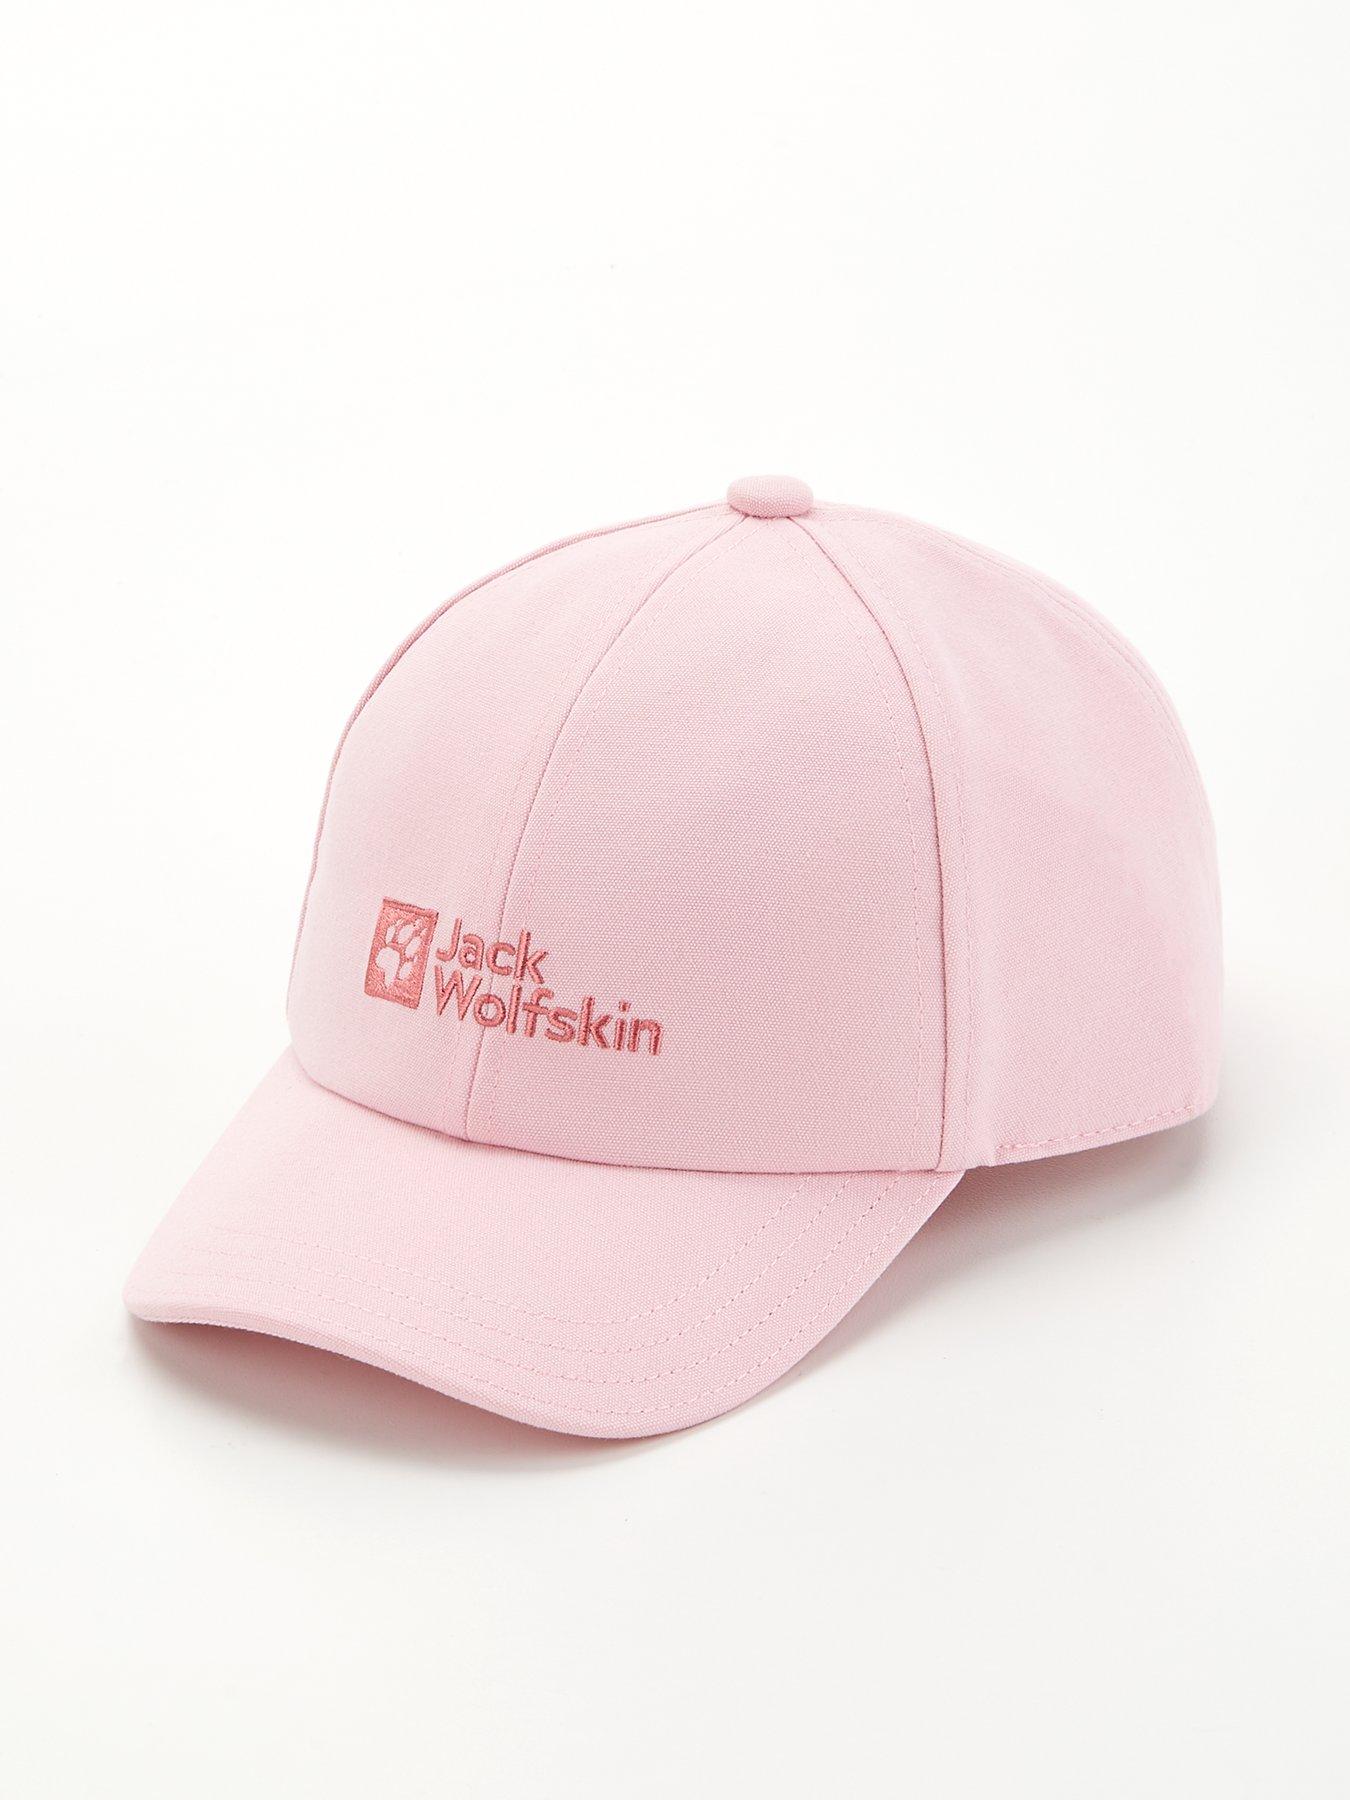 Jack Wolfskin Kids Baseball Cap - Pink